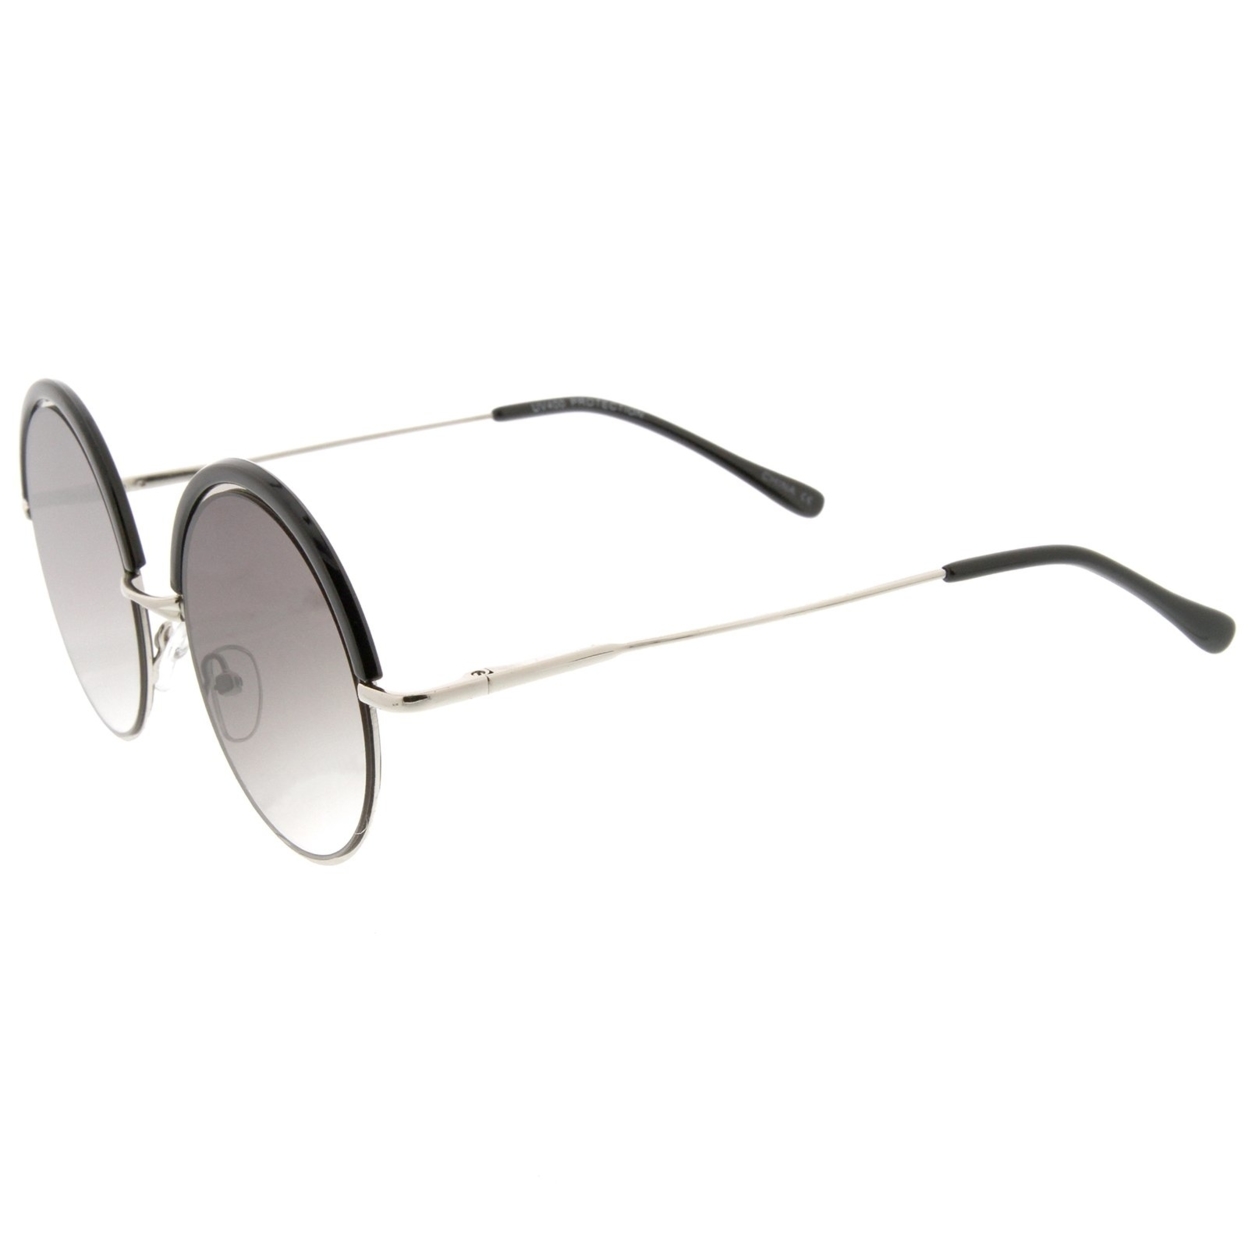 Retro Metal Frame Thin Temple Top Trim Flat Lens Round Sunglasses 51mm - Black-Gold / Smoke